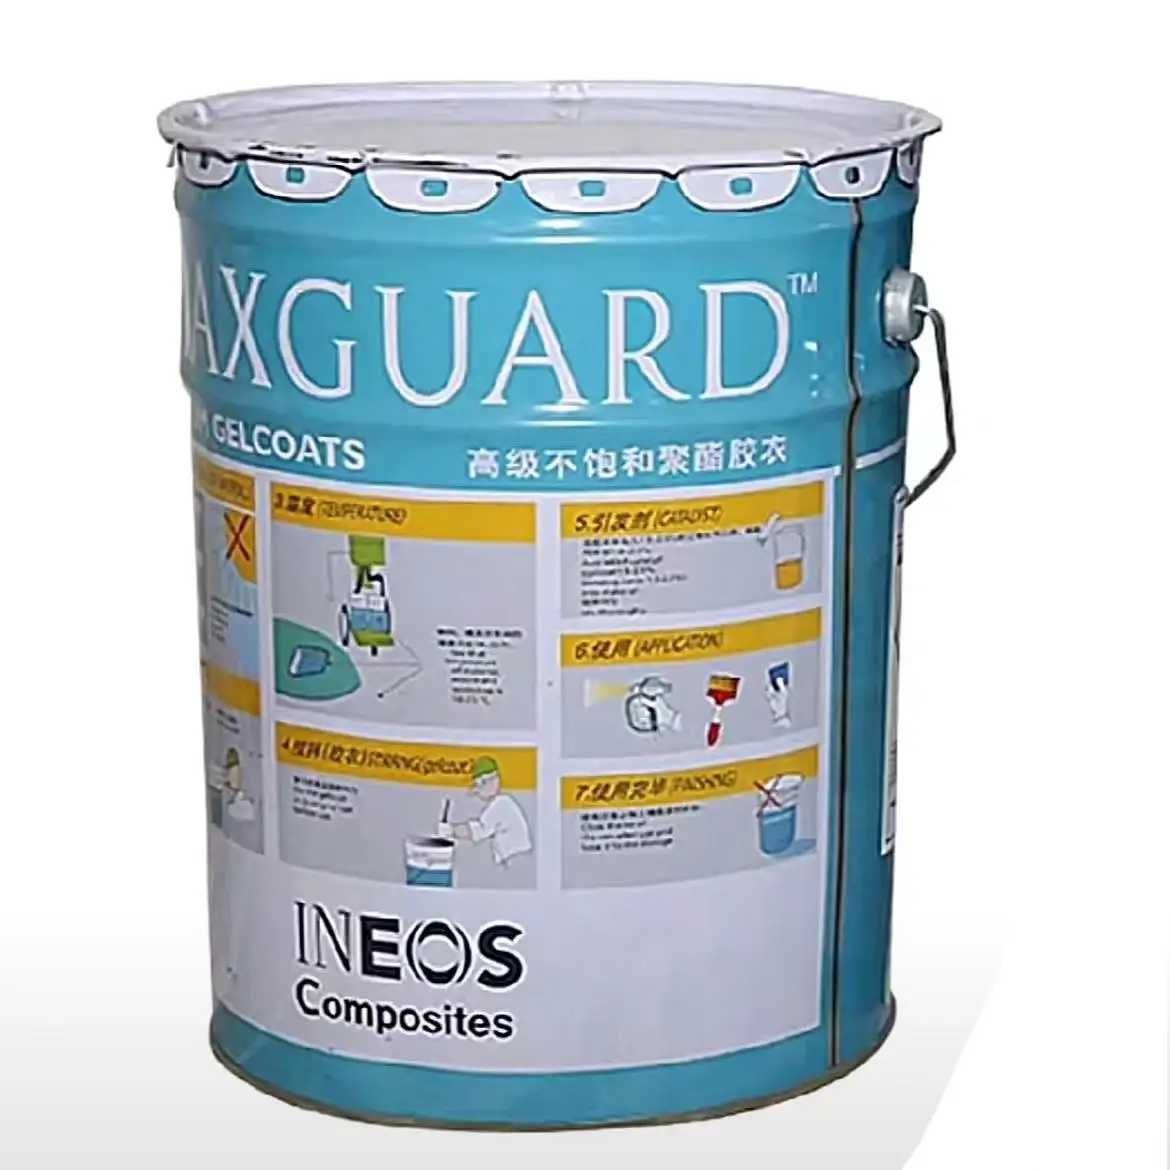 Maxguard GN0000 gel poliester serat kaca bening UV kuning untuk pembangunan perahu